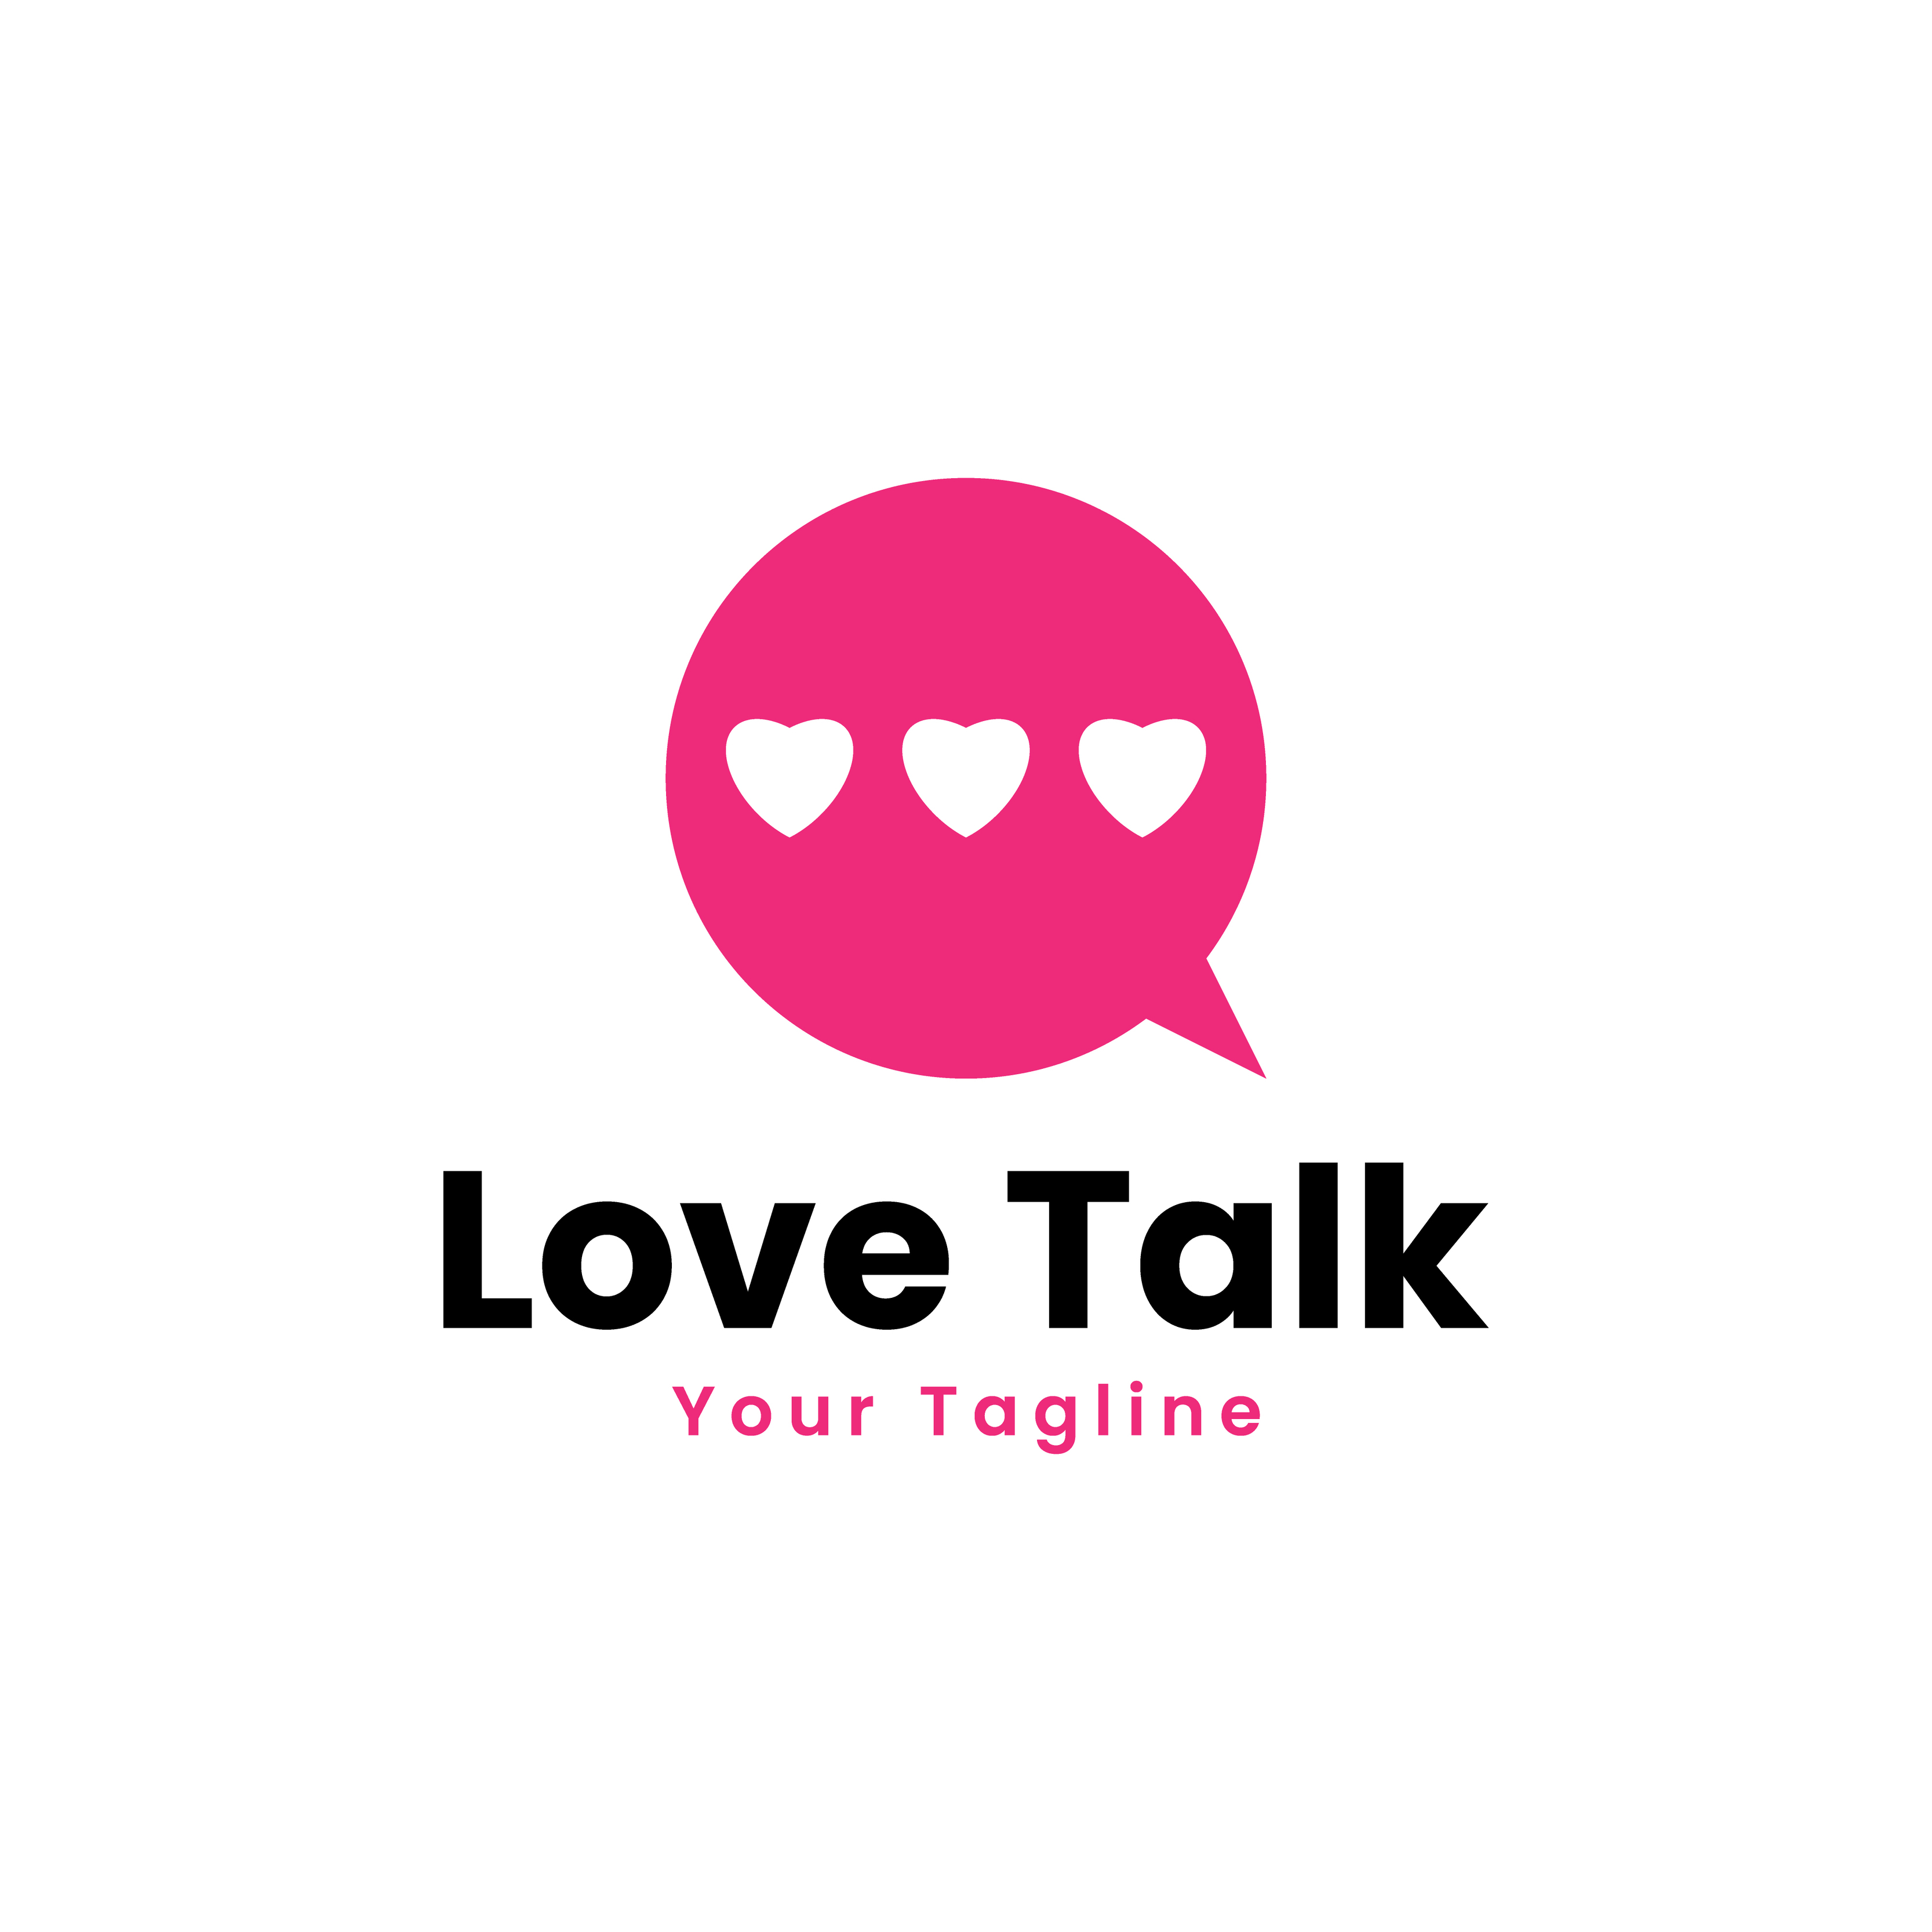 love chat or love talk logo design 5463643 Vector Art at Vecteezy